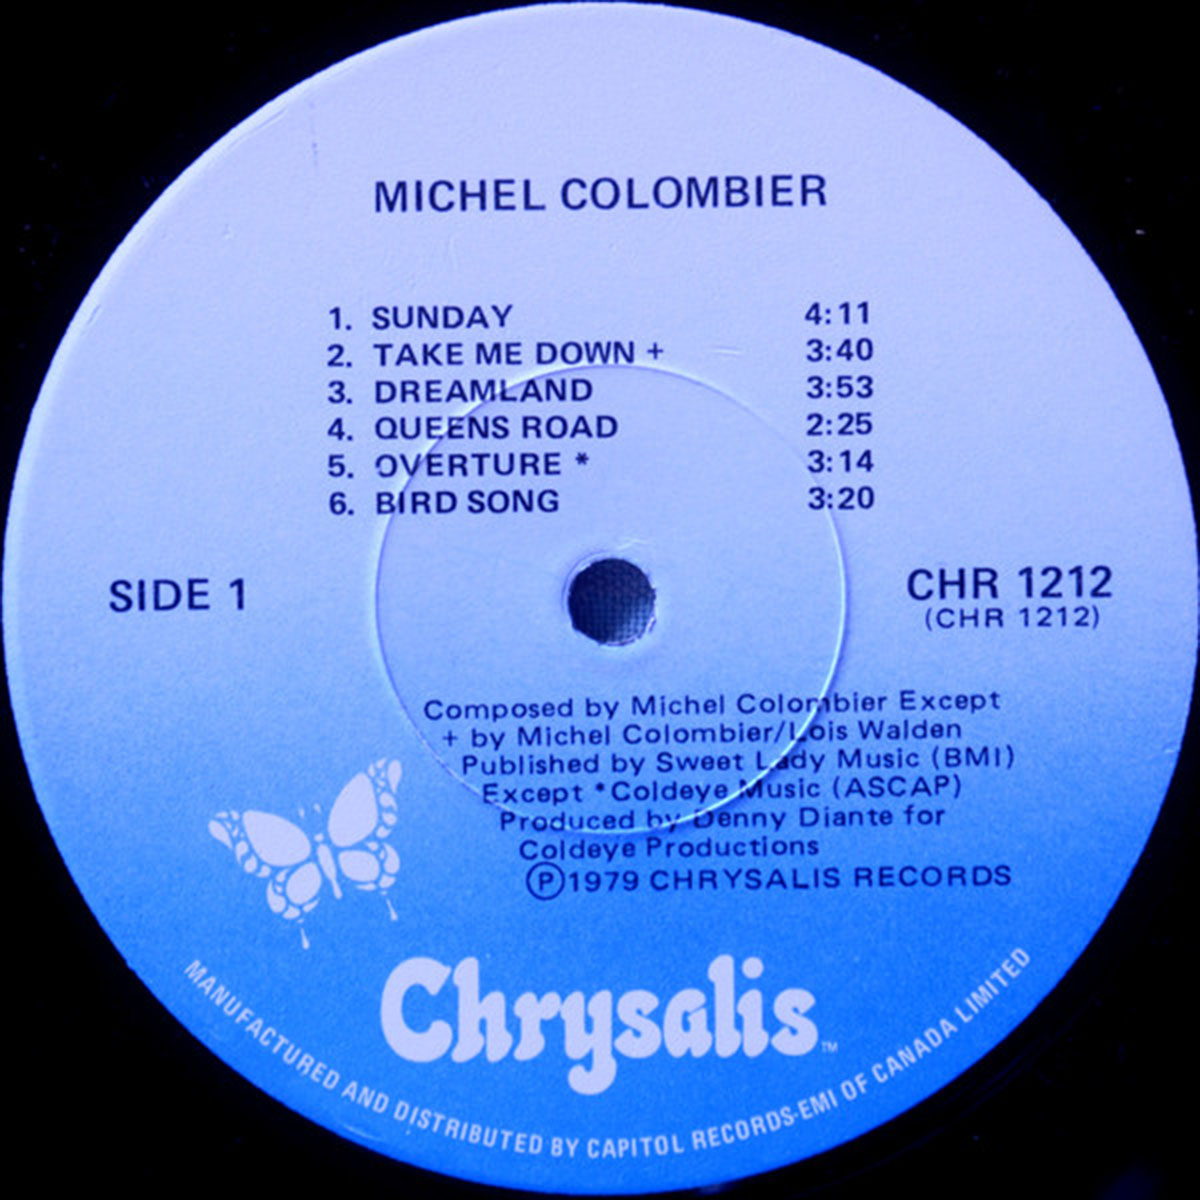 Michel Colombier – Michel Colombier